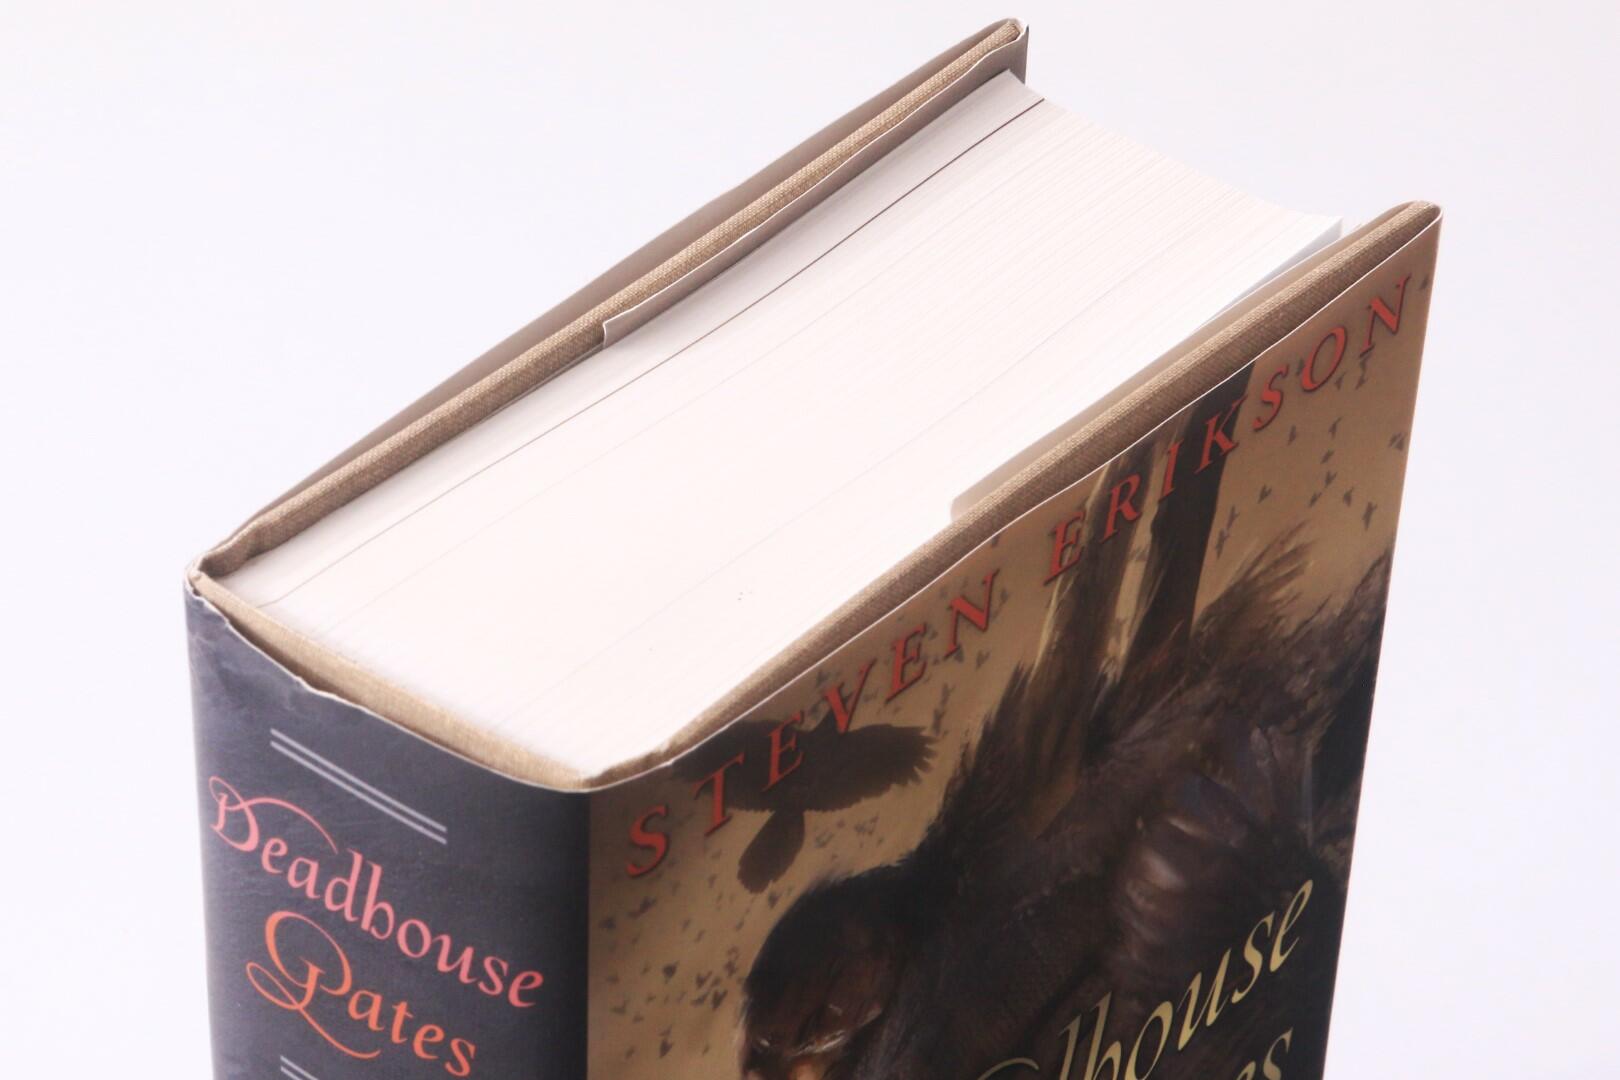 Steven Erikson - Deadhouse Gates - Subterranean Press, 2012, Signed Limited Edition.